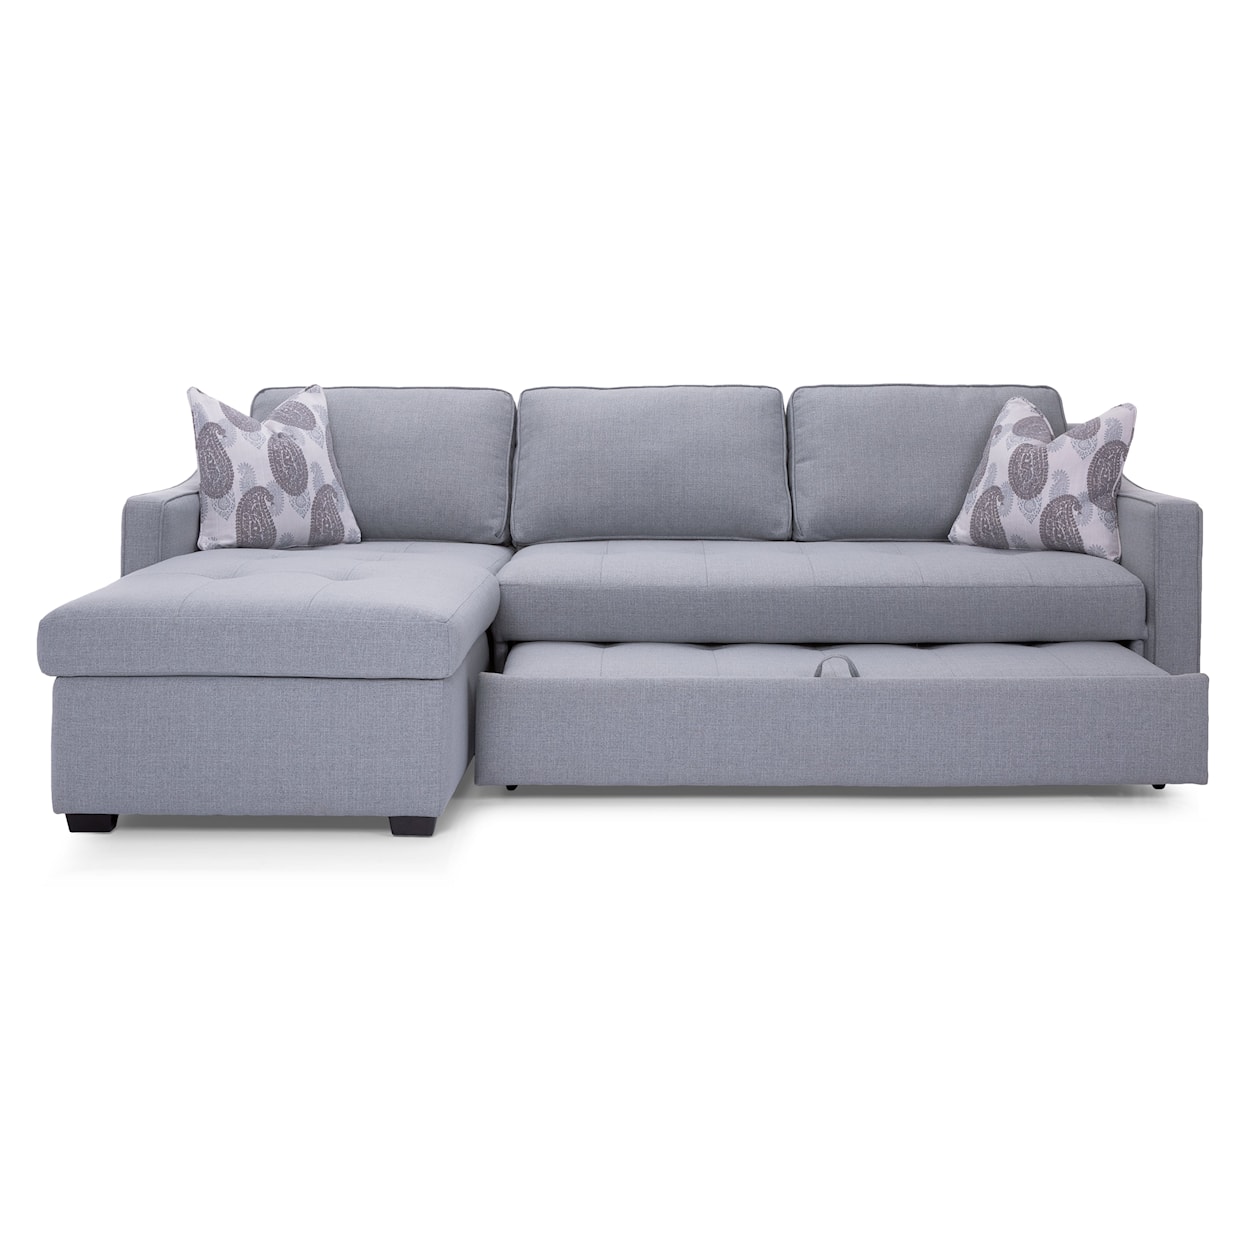 Decor-Rest M2086 Sleeper Sofa 